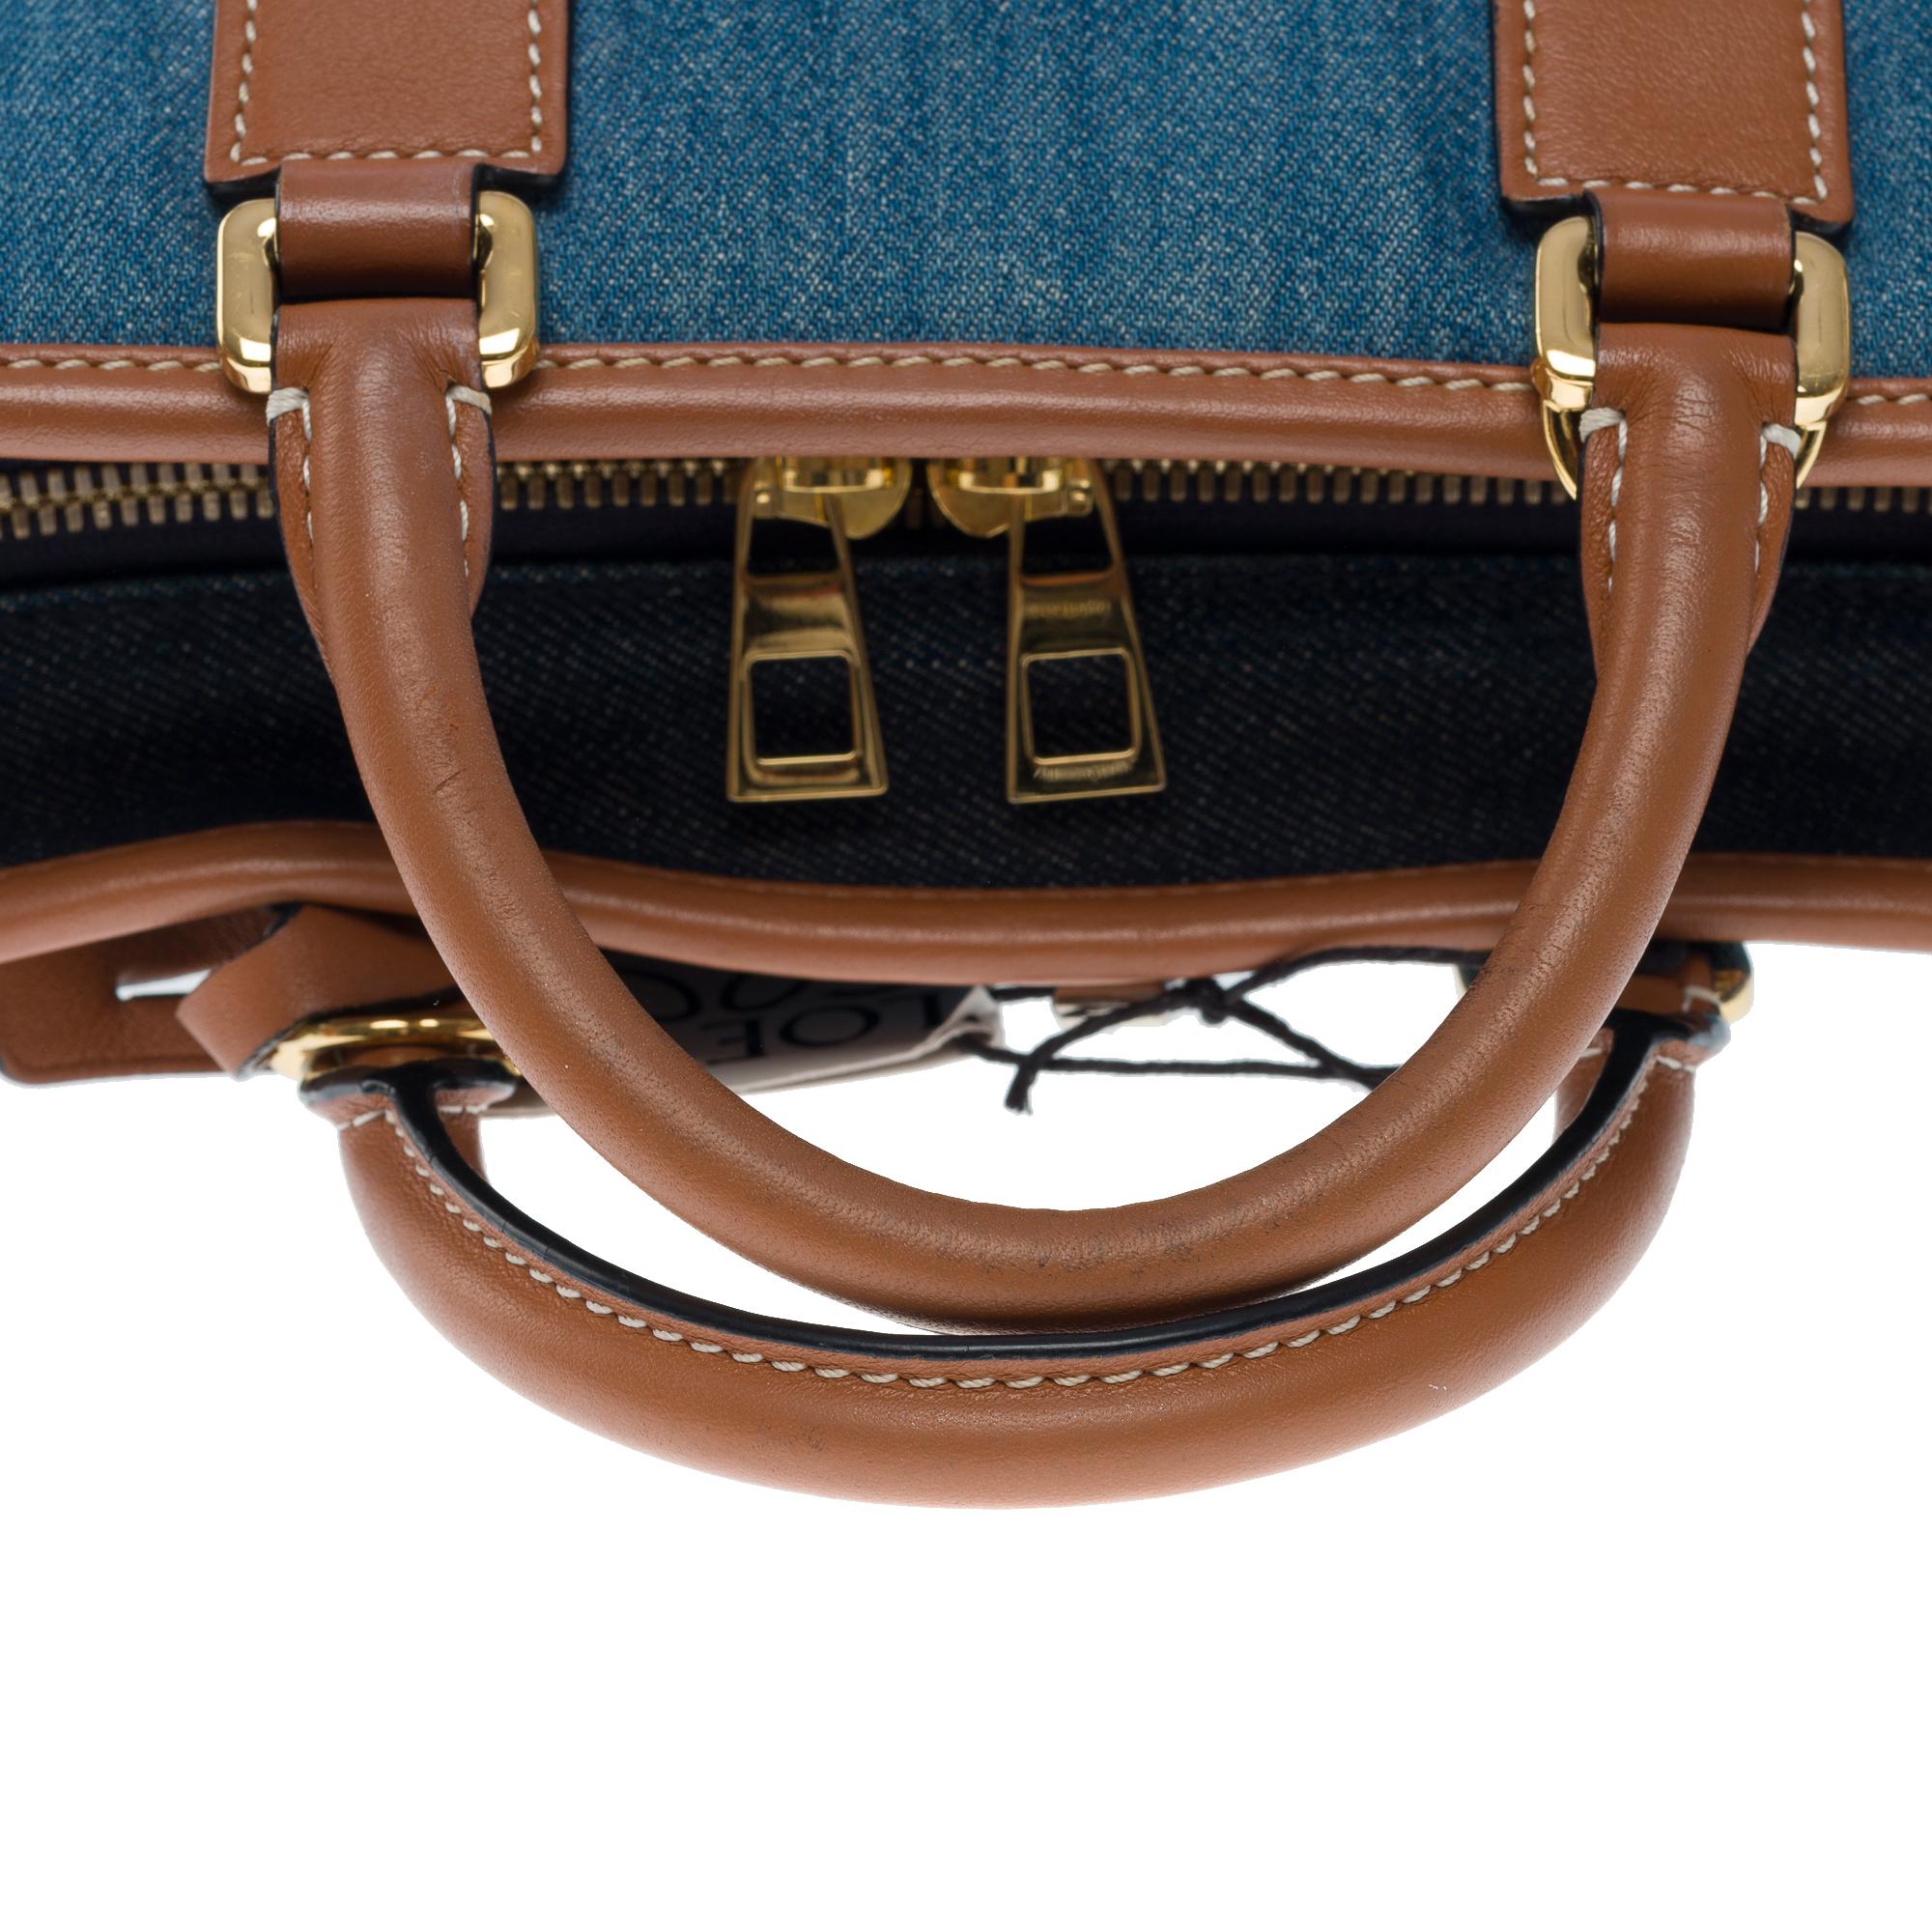 Loewe Amazona 23 2 Way handbag in denim and brown leather, GHW 5